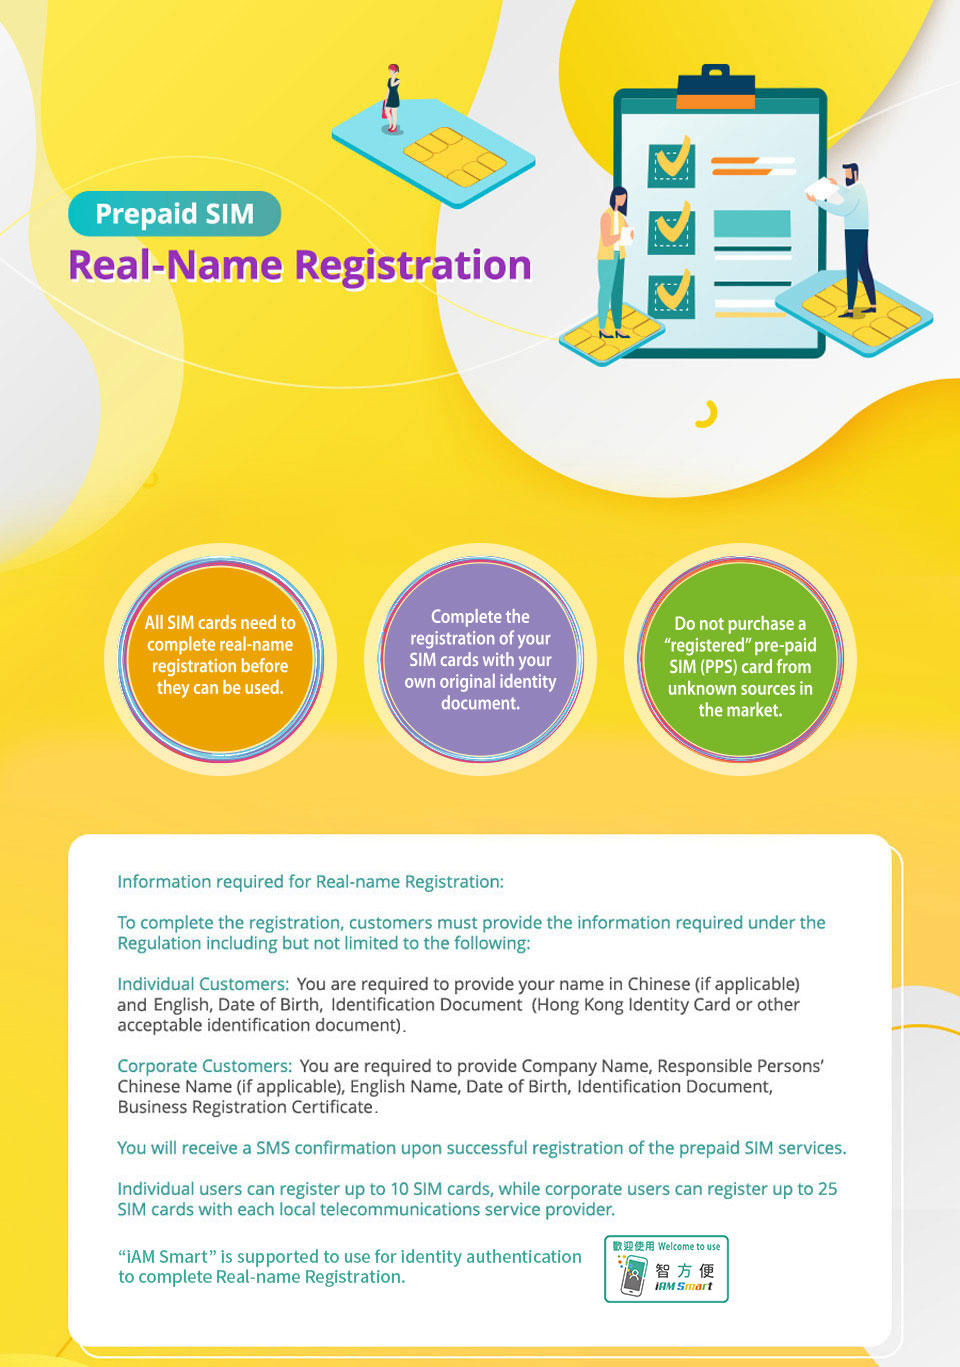 Real-name registration for SIM cards